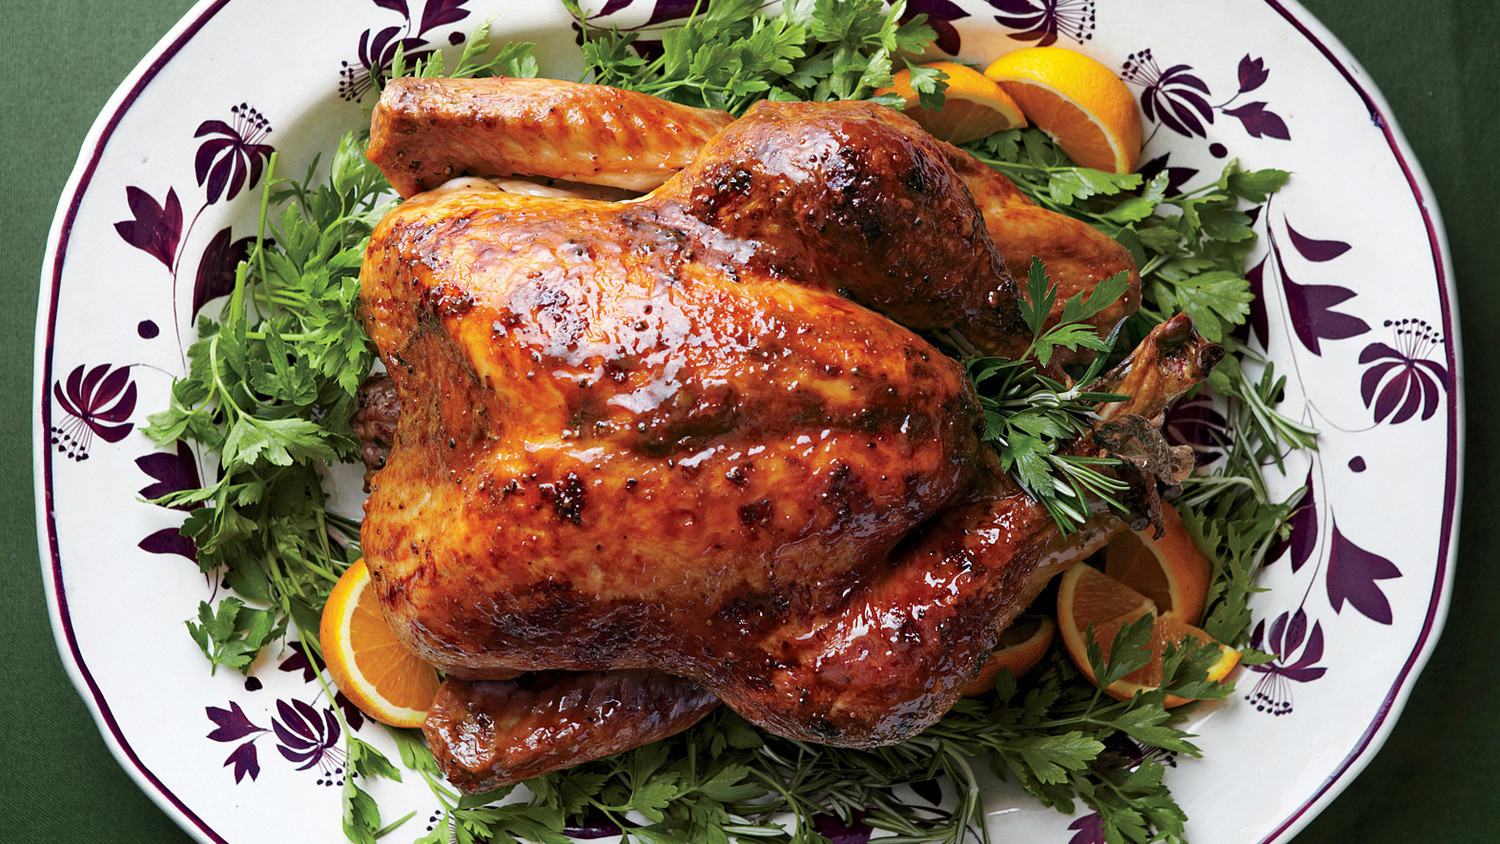 Picture Of Thanksgiving Turkey
 38 Terrific Thanksgiving Turkey Recipes